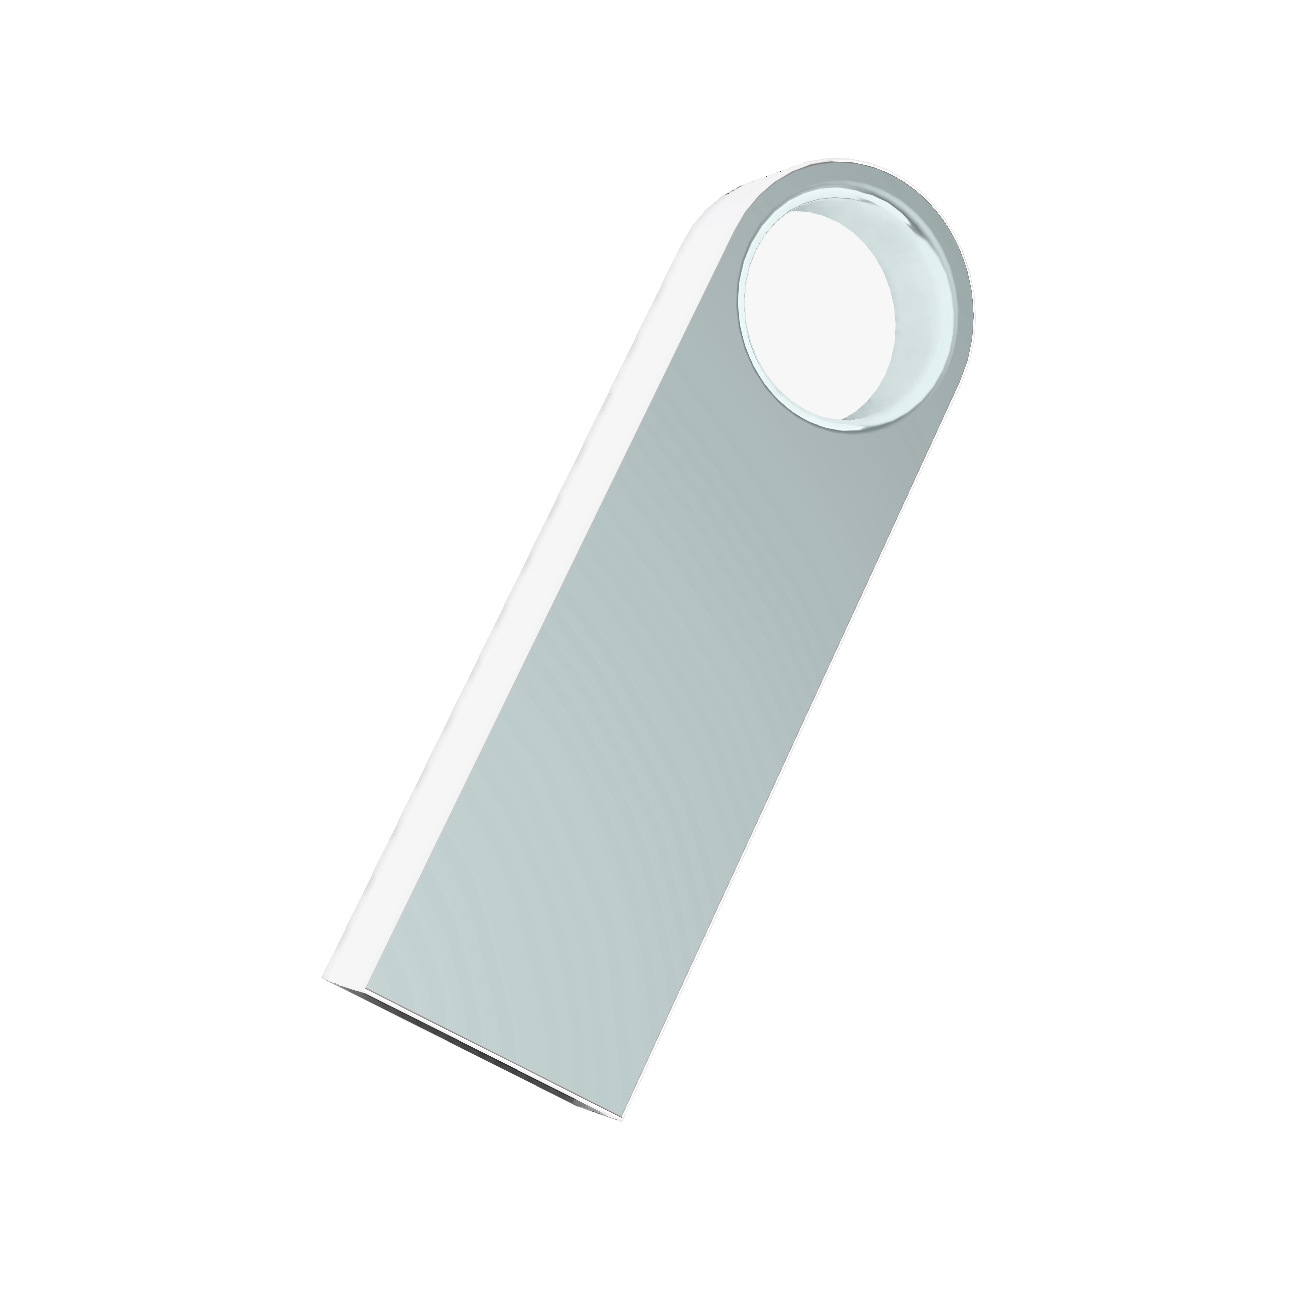 USB GERMANY ® SE09 USB-Stick (Silber, GB) 1